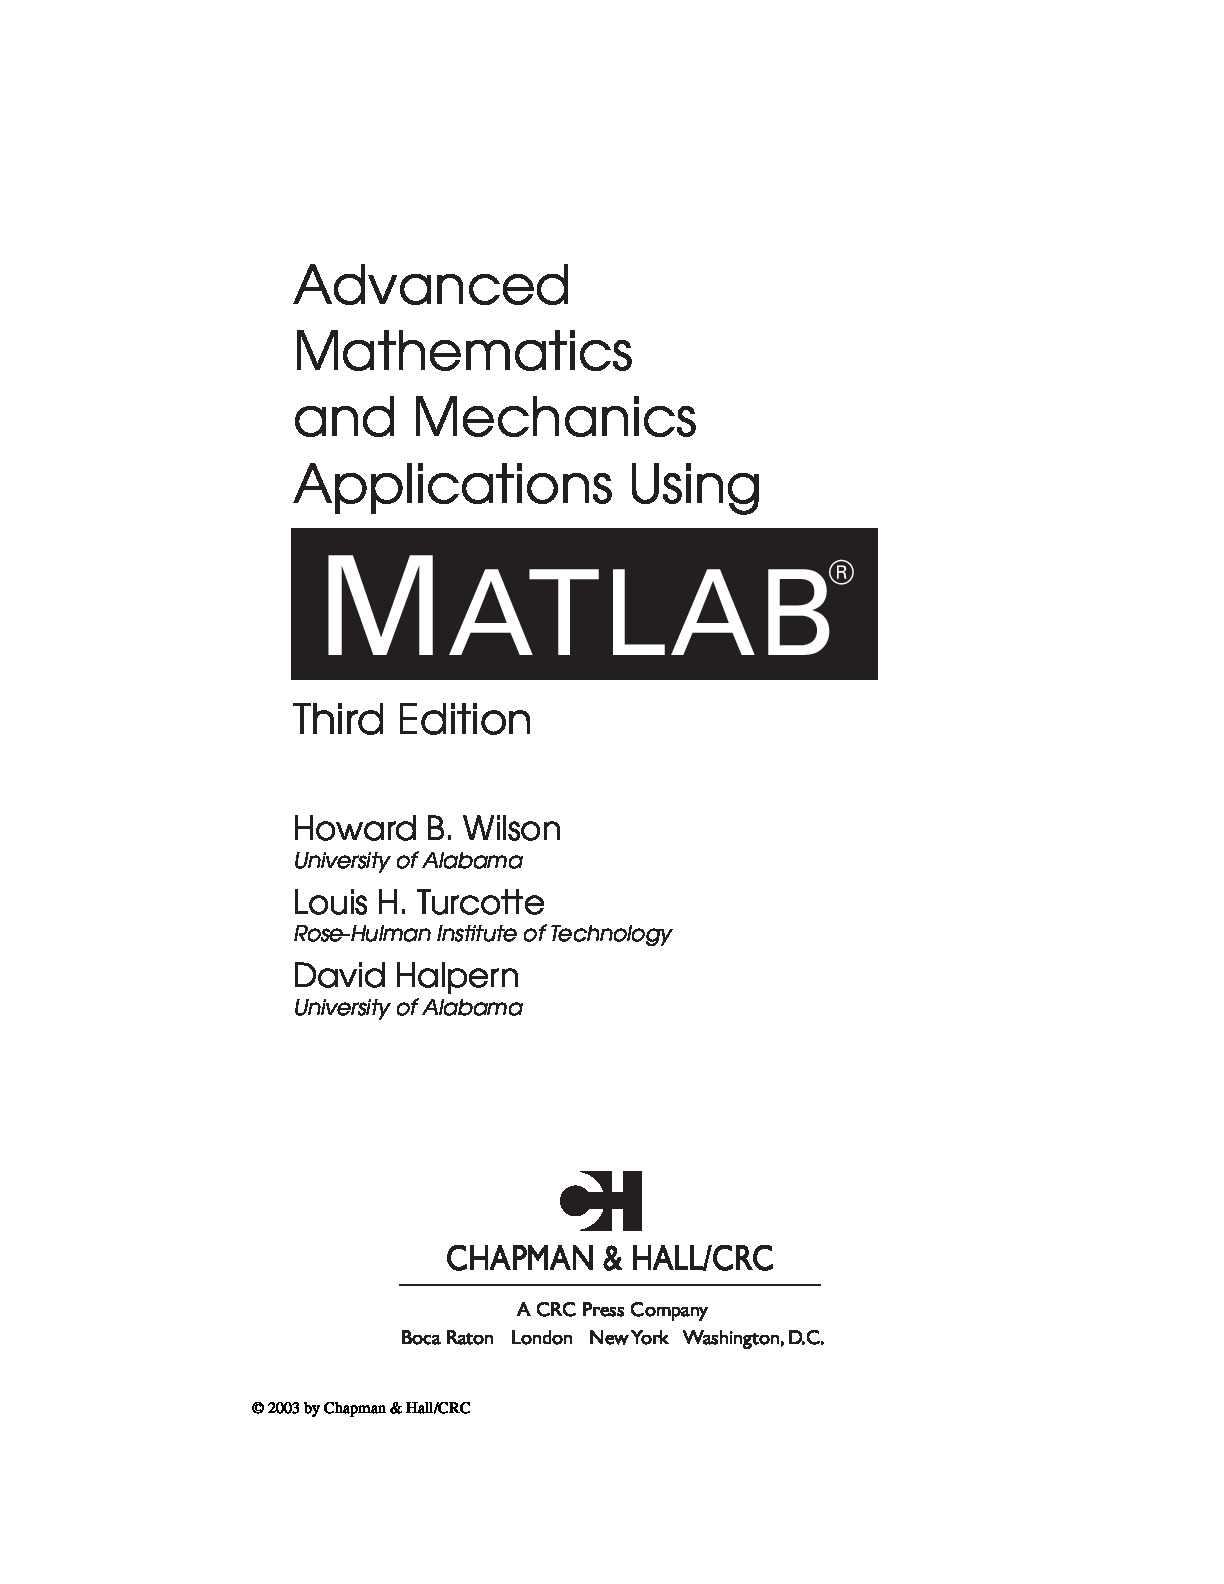 Advanced Mathematics and Mechanics Applications